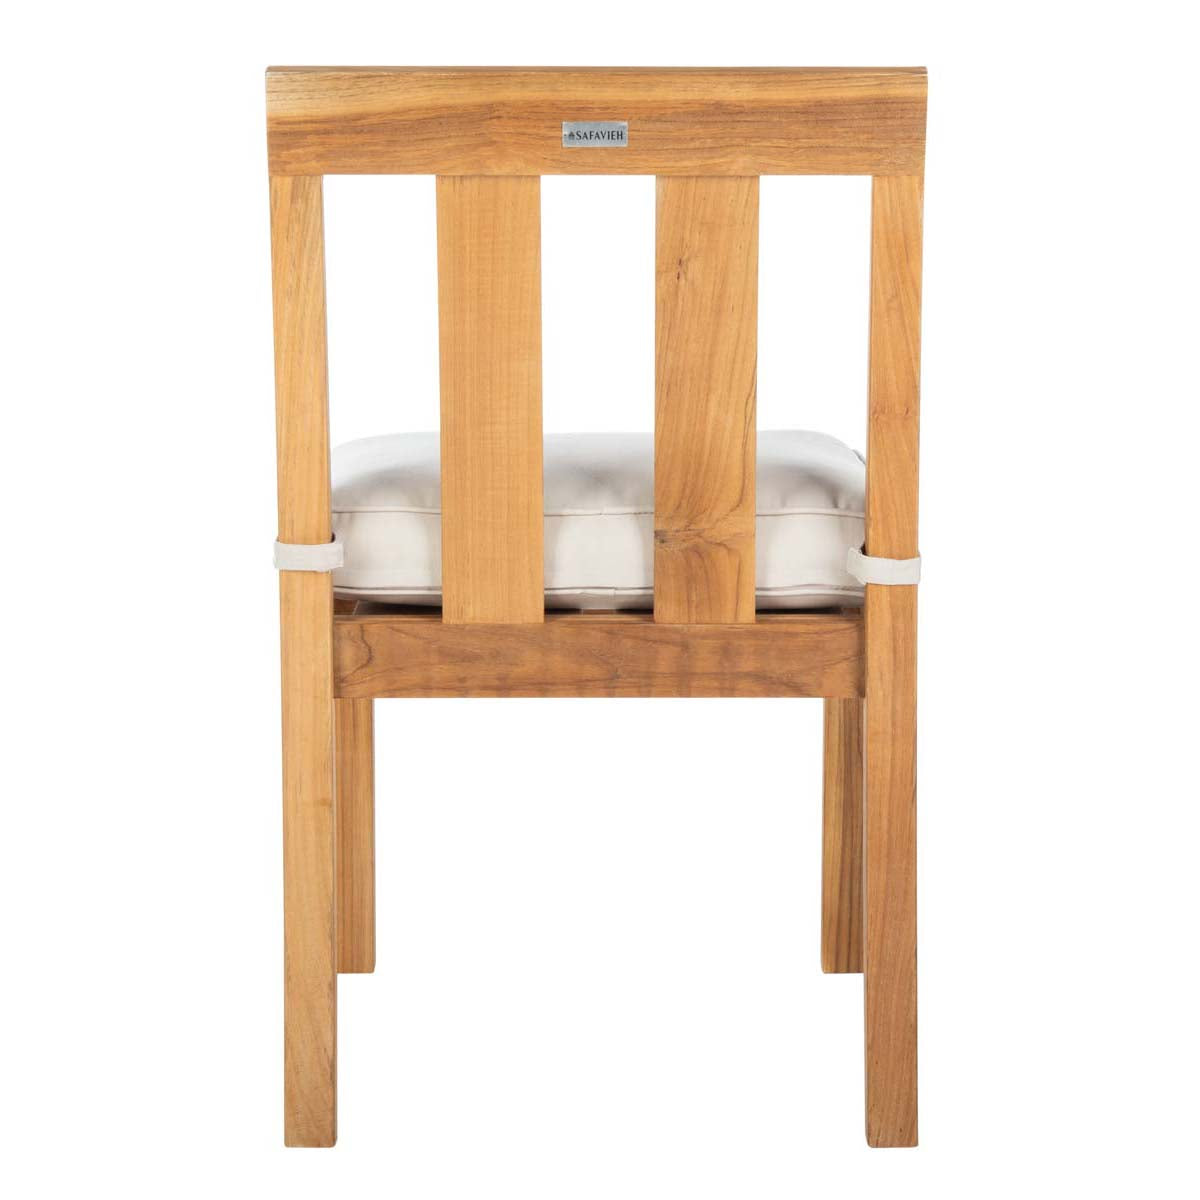 Safavieh Couture Montford Teak Dining Chair Natural (Set of 2) - Natural / Beige